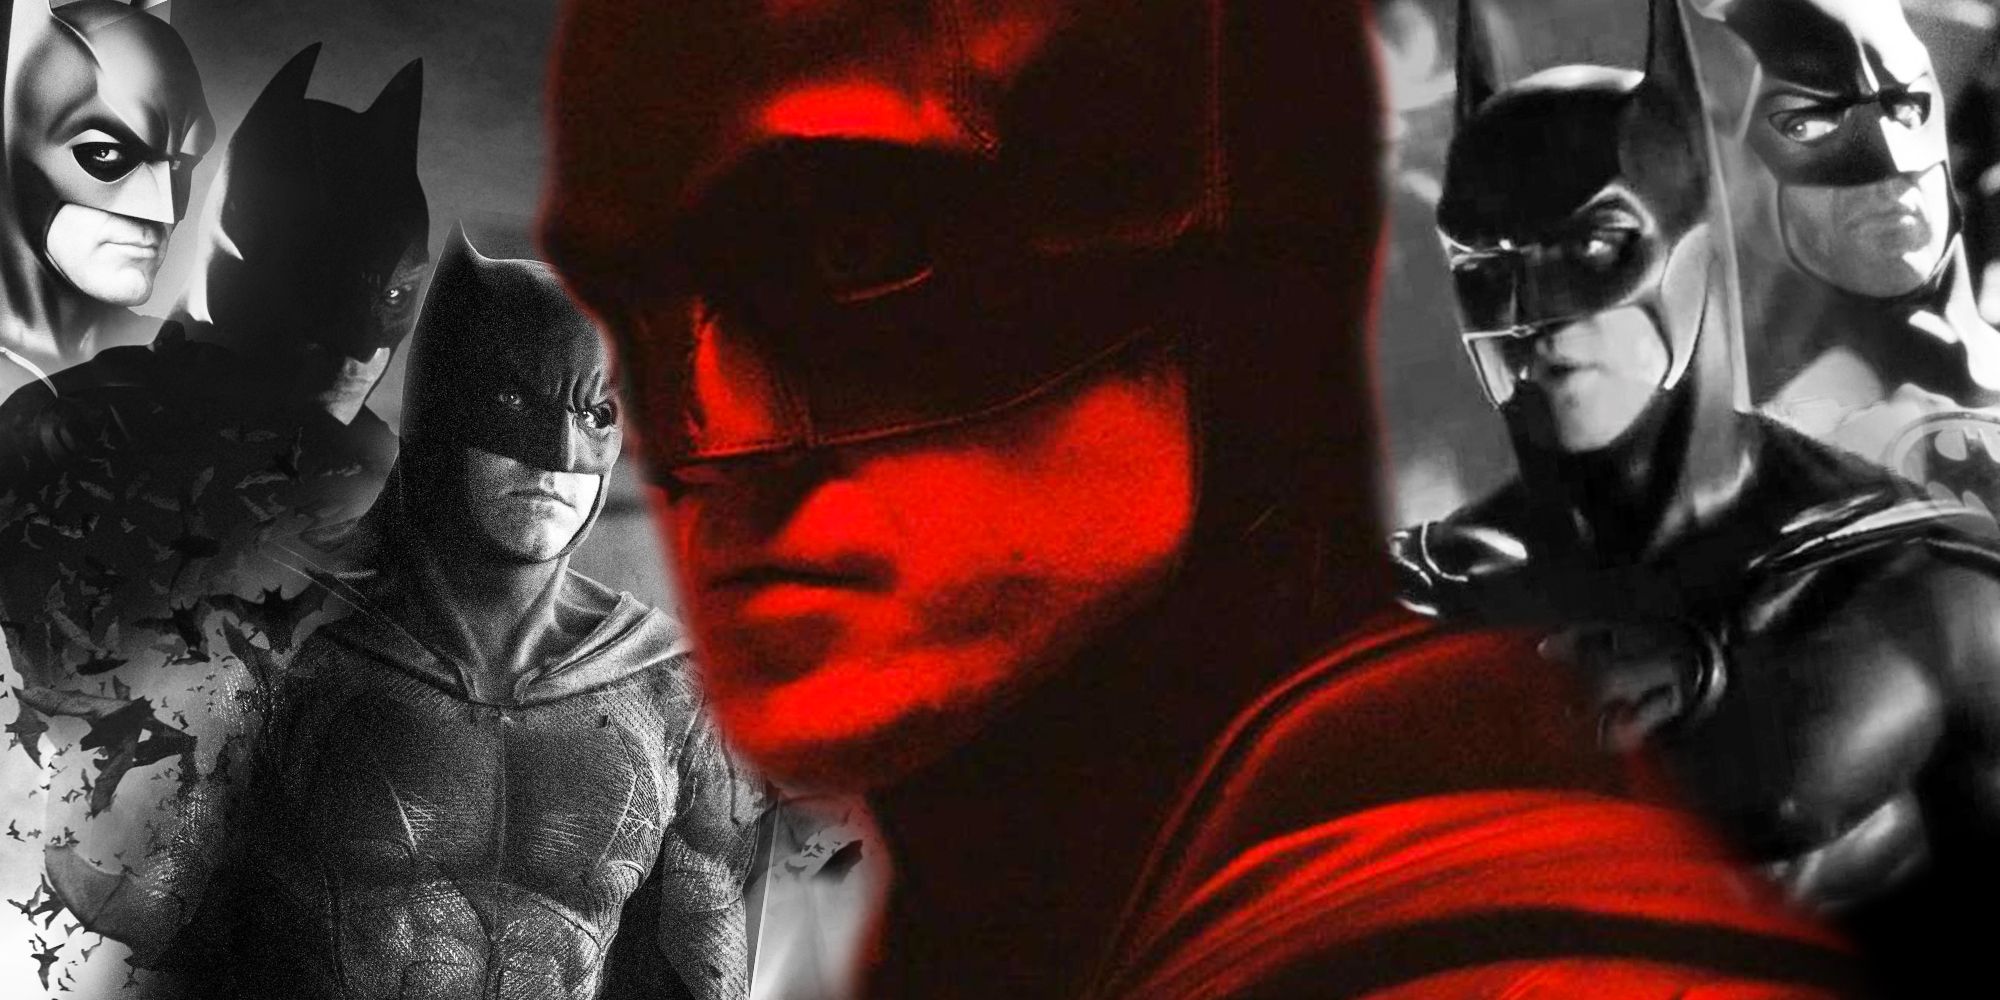 Robert Pattinson in The Batman superimposed over images of Batman movie versions